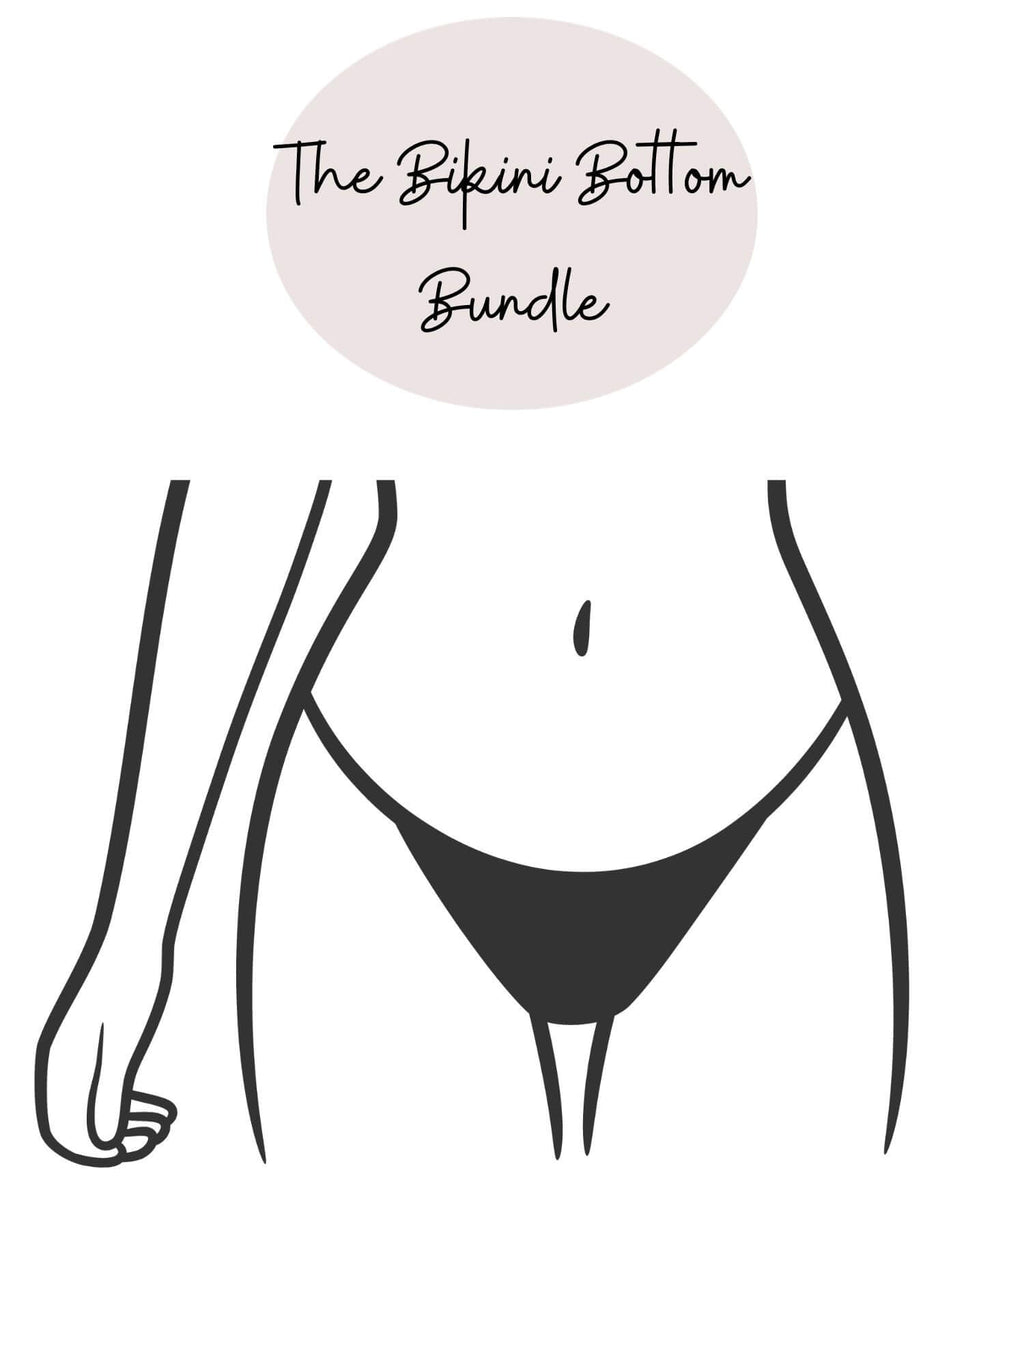 Serena Hipster Bikini Bottom Ribbed Fabric